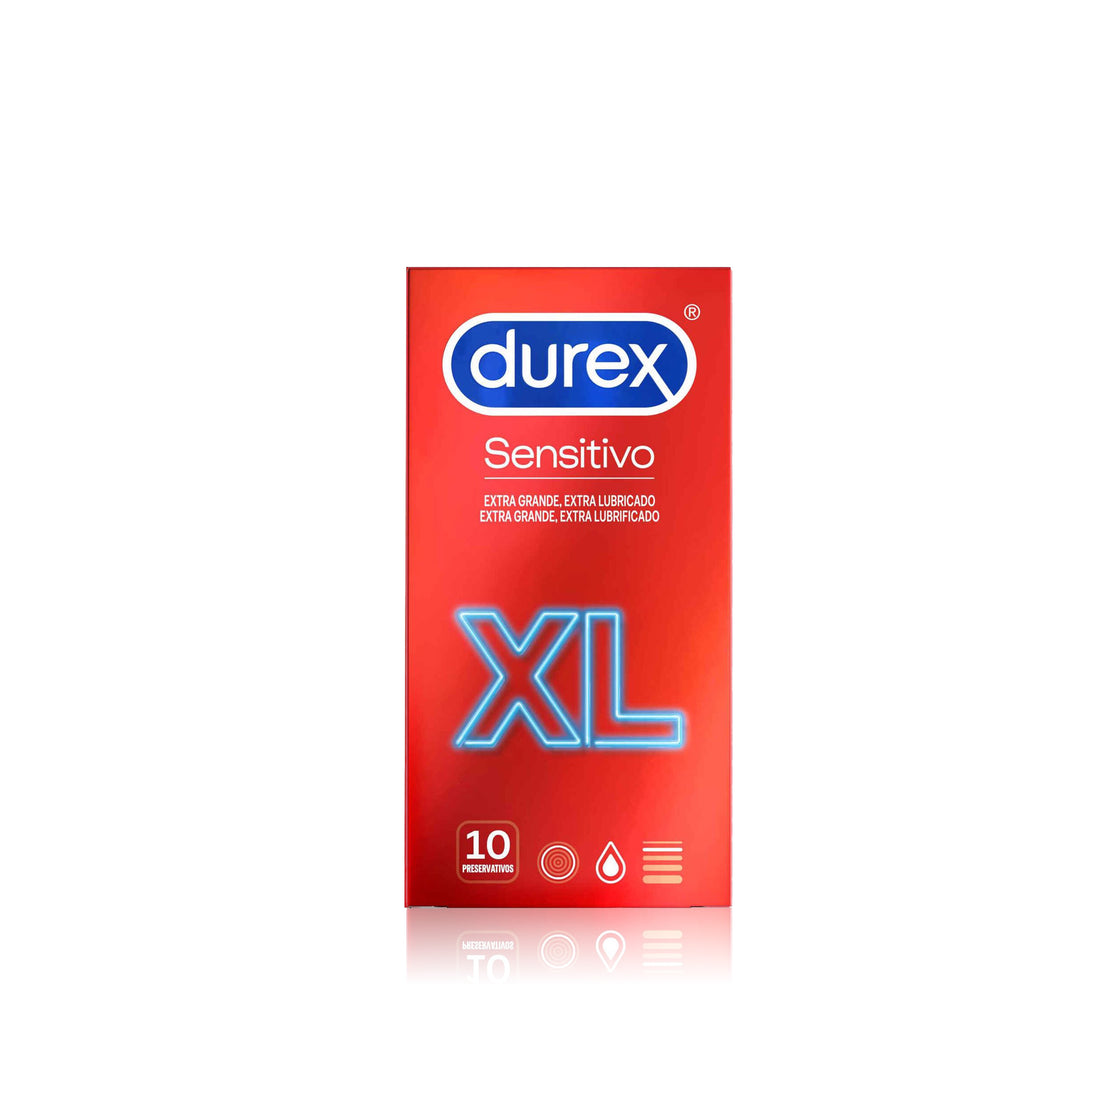 Durex Sensitive Preservativos Xl 10 Un